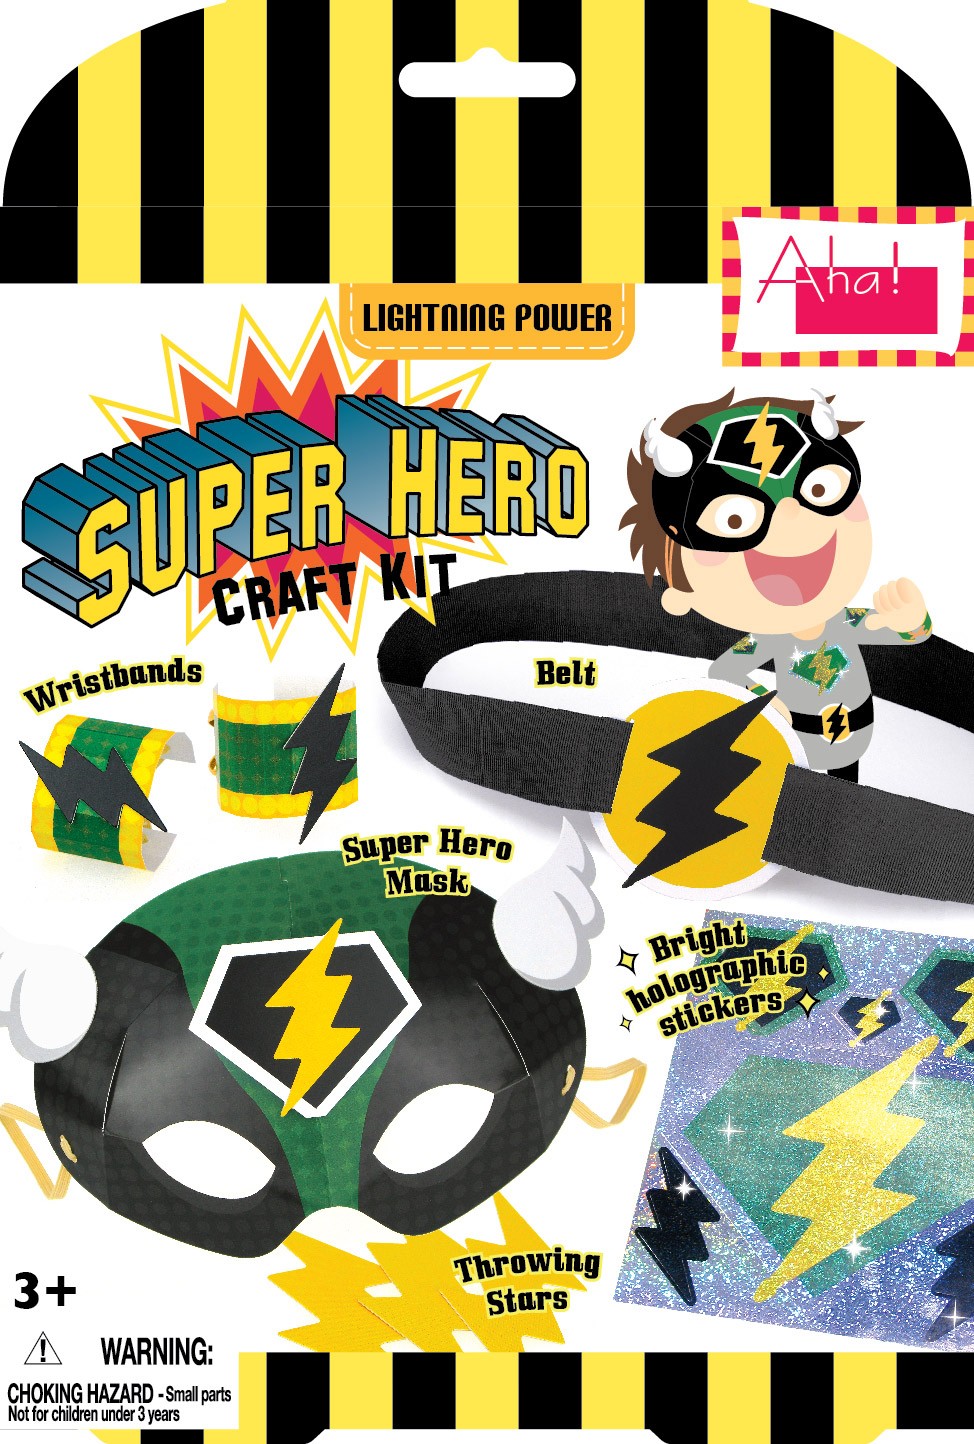 Two Design of Aha Design Super Hero Craft Kits